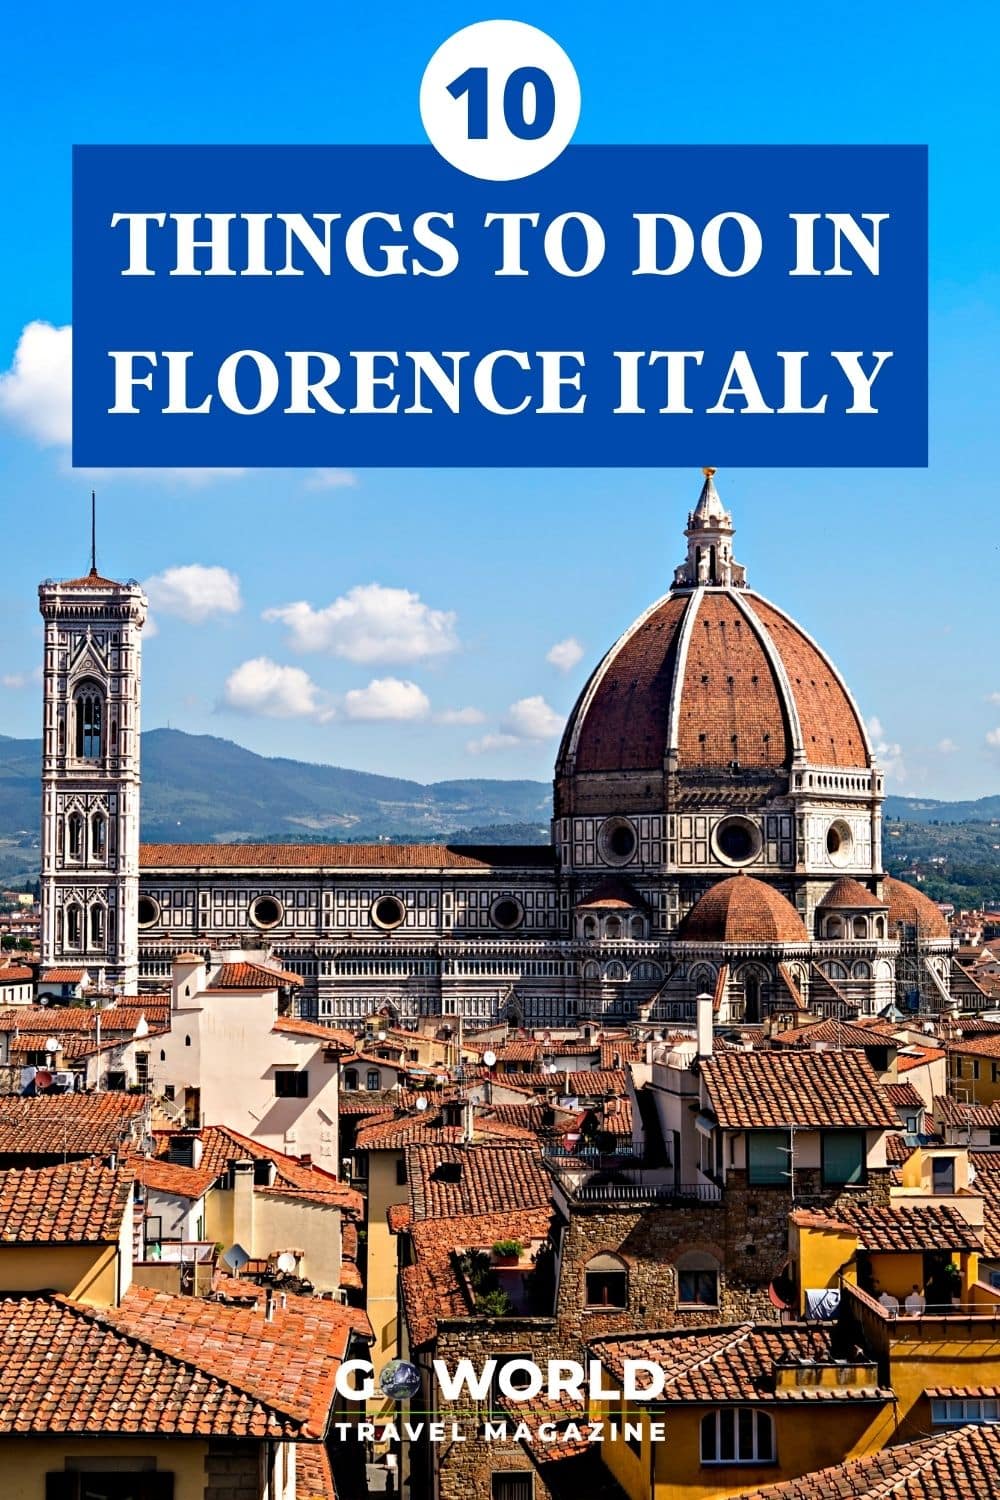 Benamkan diri Anda dalam dunia mahakarya artistik, makanan luar biasa, sejarah, dan arsitektur dengan hal-hal terbaik yang dapat dilakukan di Florence, Italia.  #florenceitaly